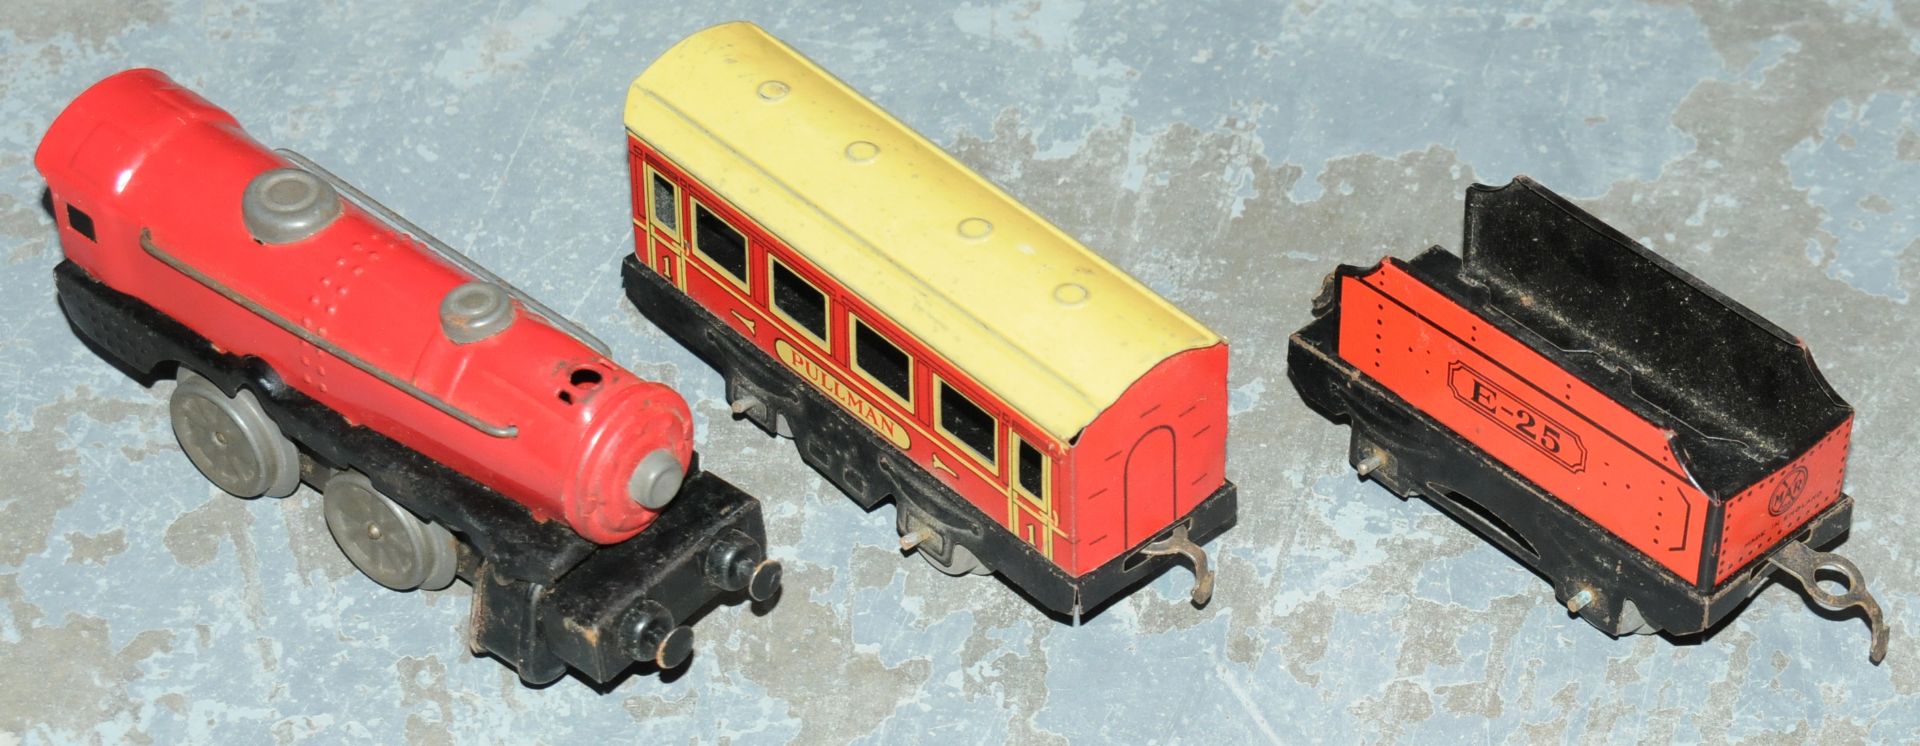 Marx Toys Clockwork Tinplate Trains Set - Bild 3 aus 6